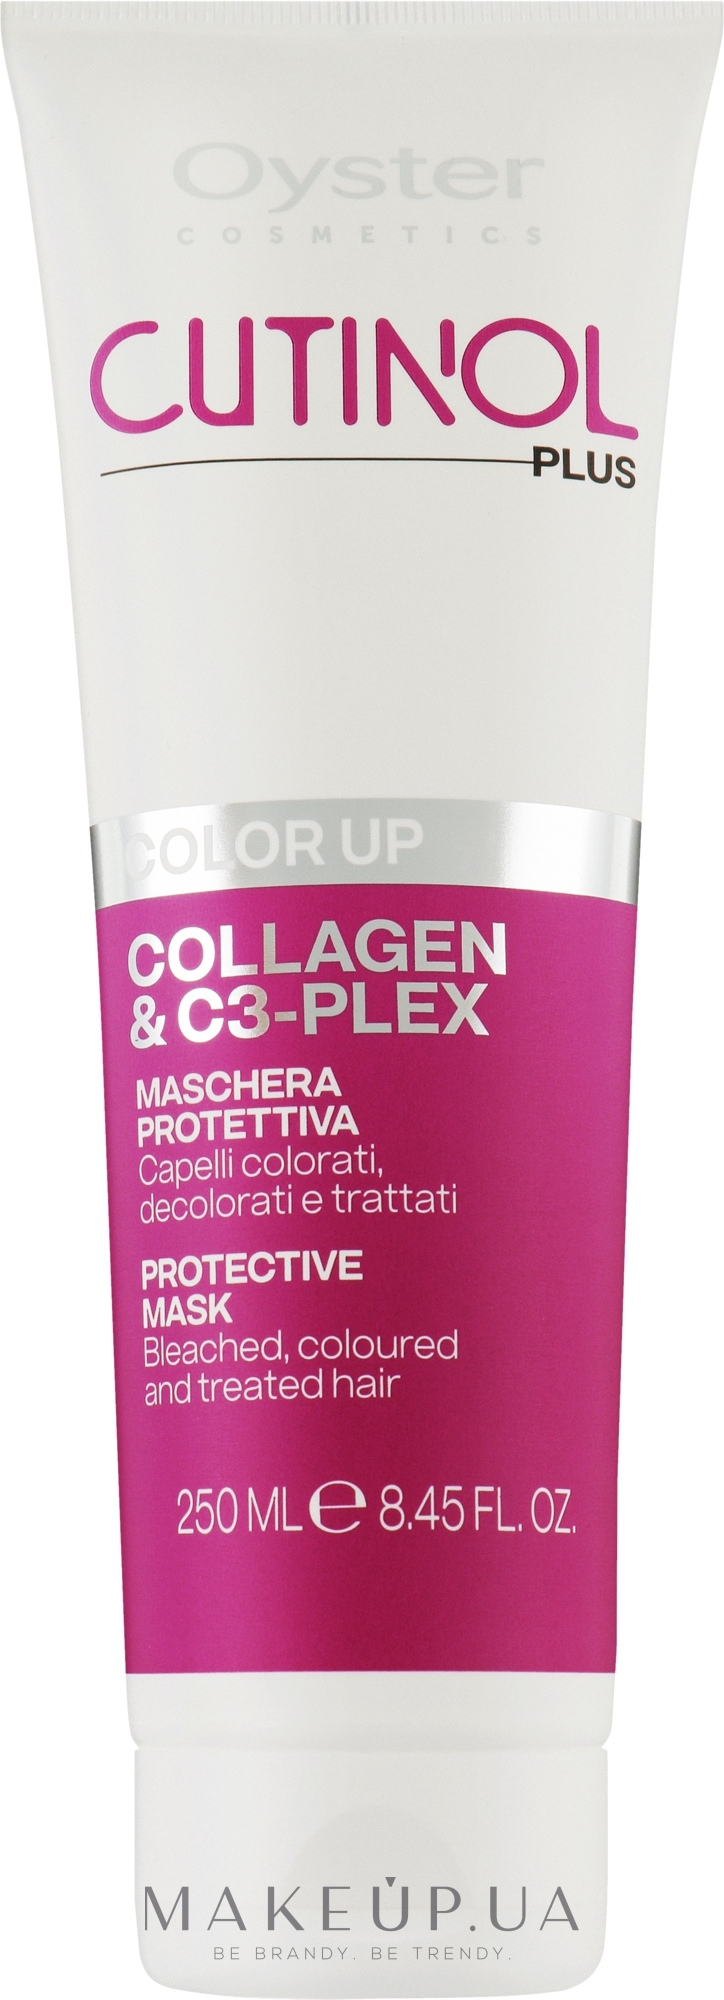 Маска для фарбованого волосся - Oyster Cutinol Plus Collagen & C3-Plex Color Up Protective Mask — фото 250ml